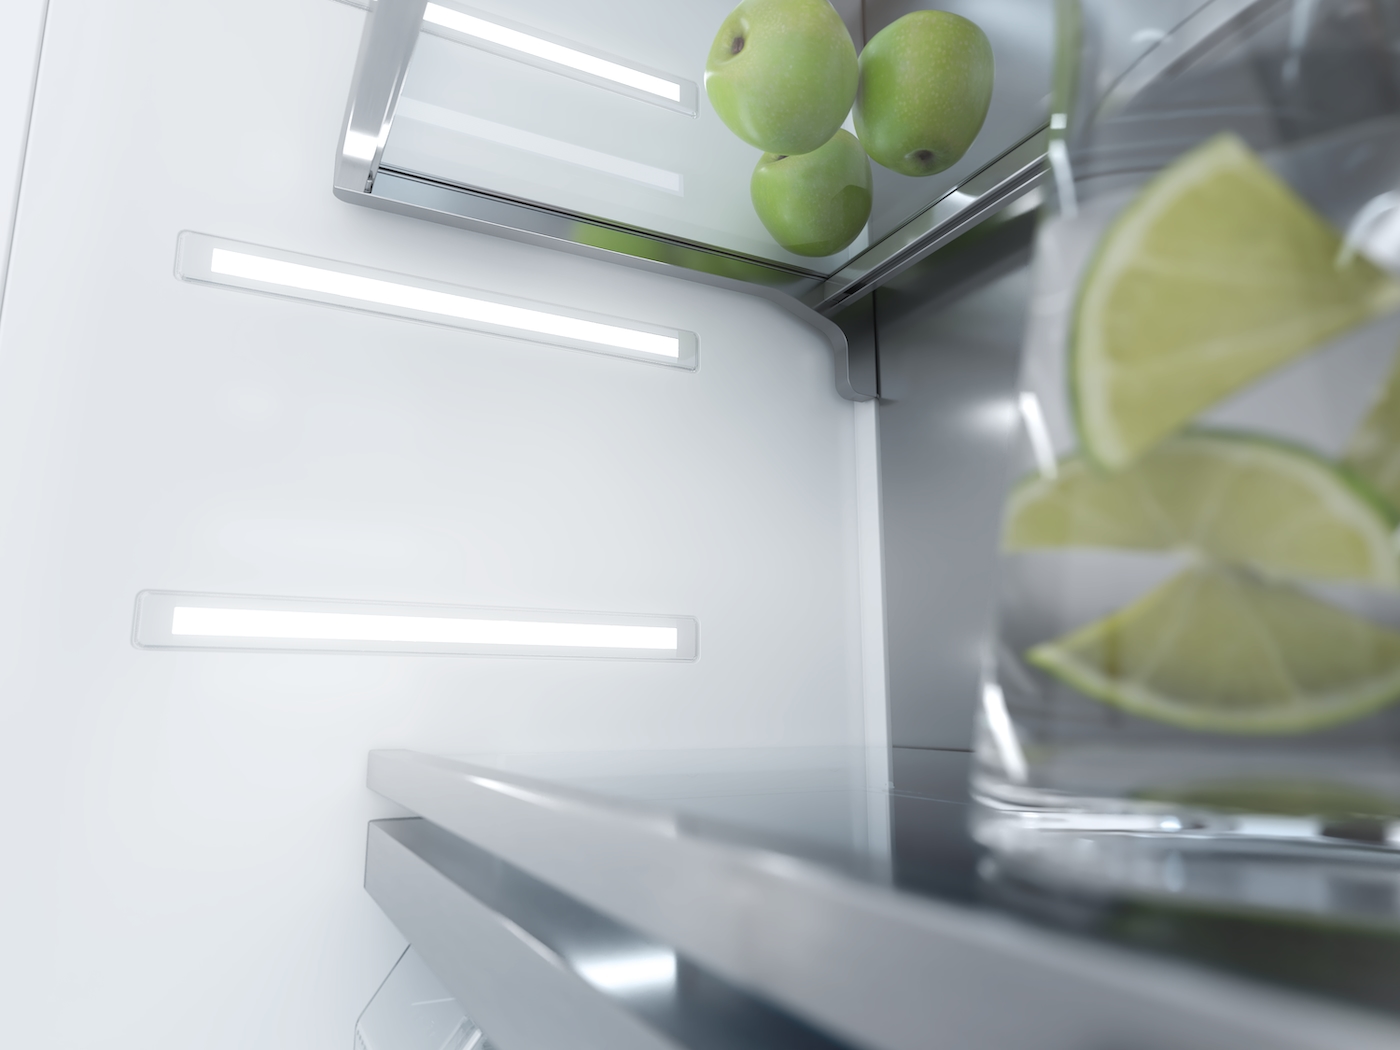 K 2801 Vi MasterCool refrigerator product photo Laydowns Detail View ZOOM